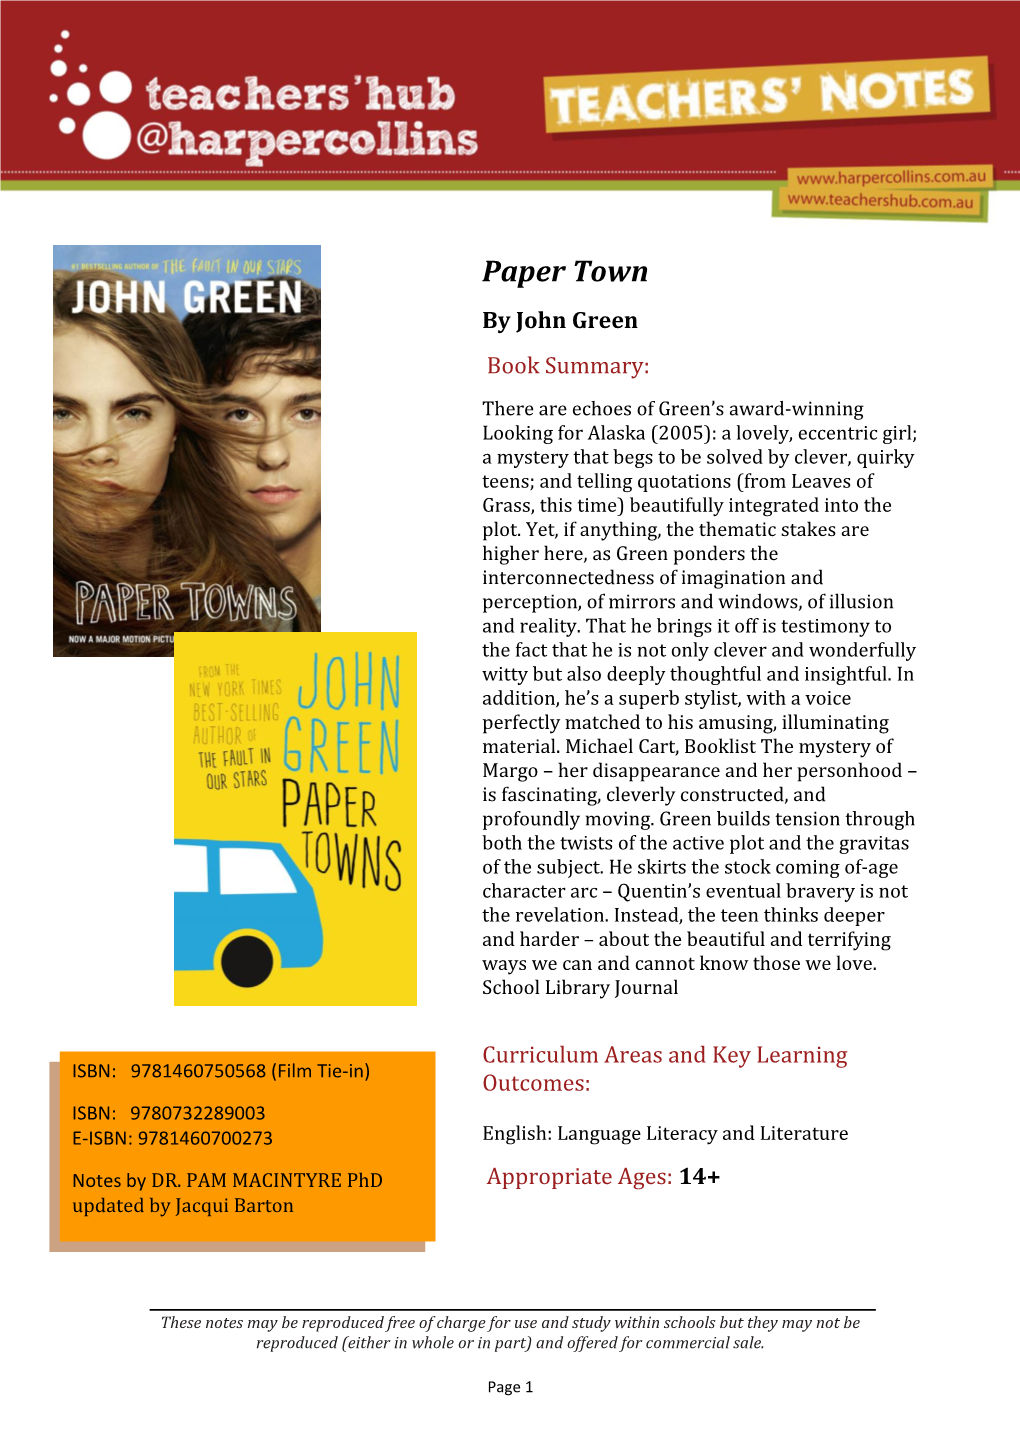 Paper Town by John Green